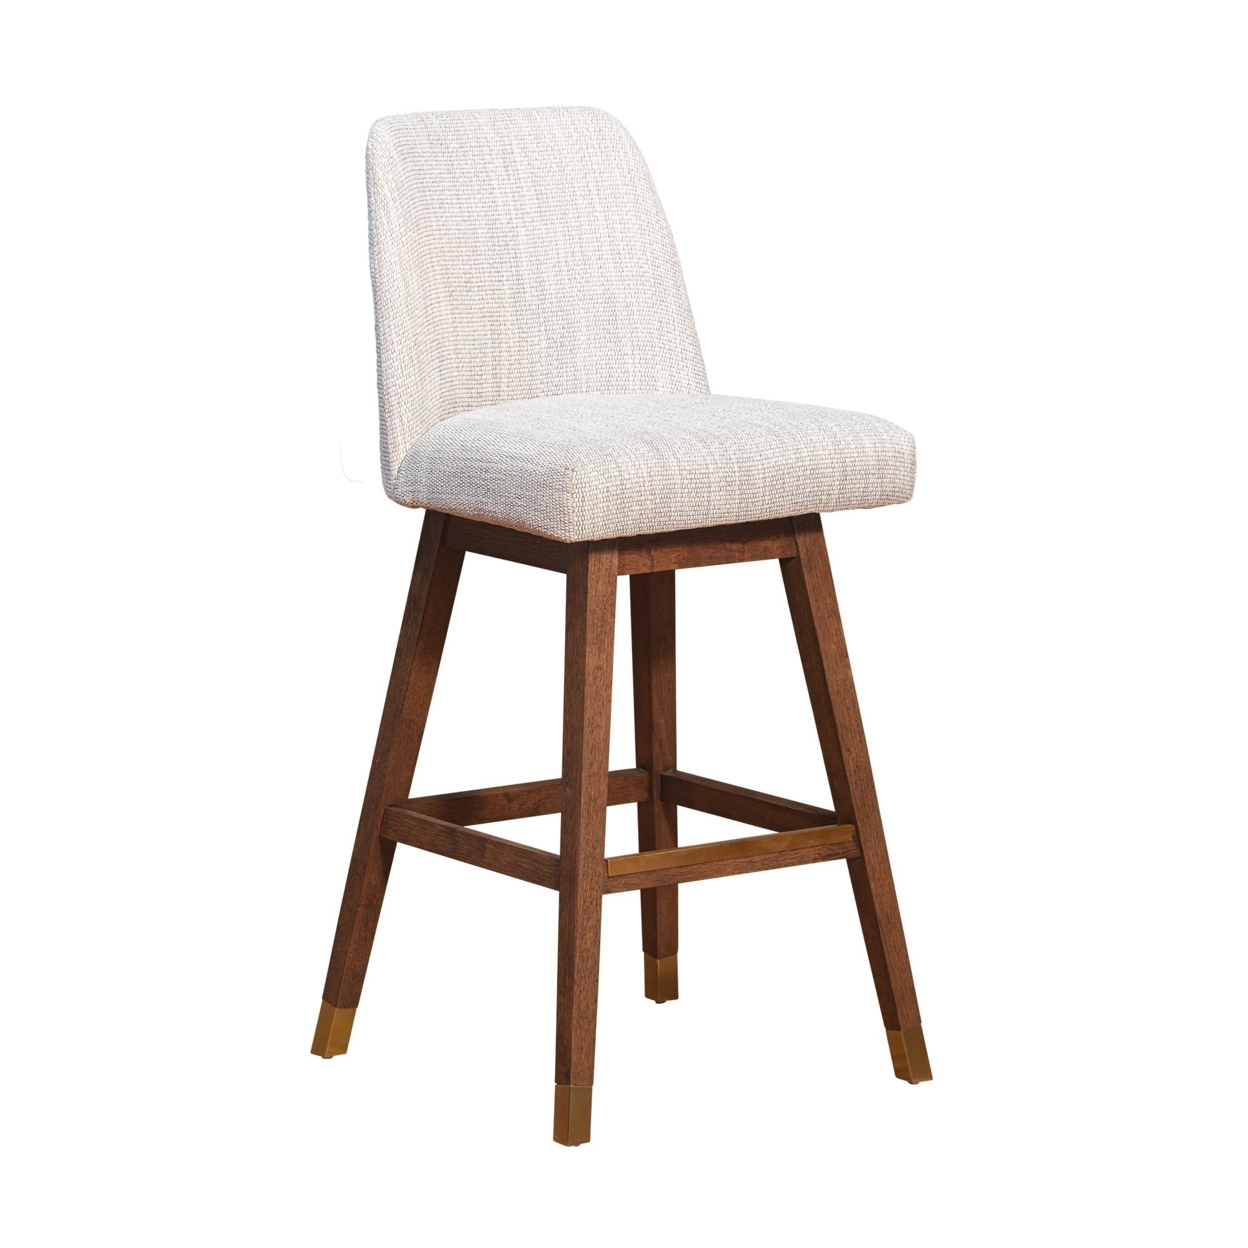 Lara 30 Inch Swivel Barstool Chair, Soft Beige Polyester, Brown Wood Legs- Saltoro Sherpi